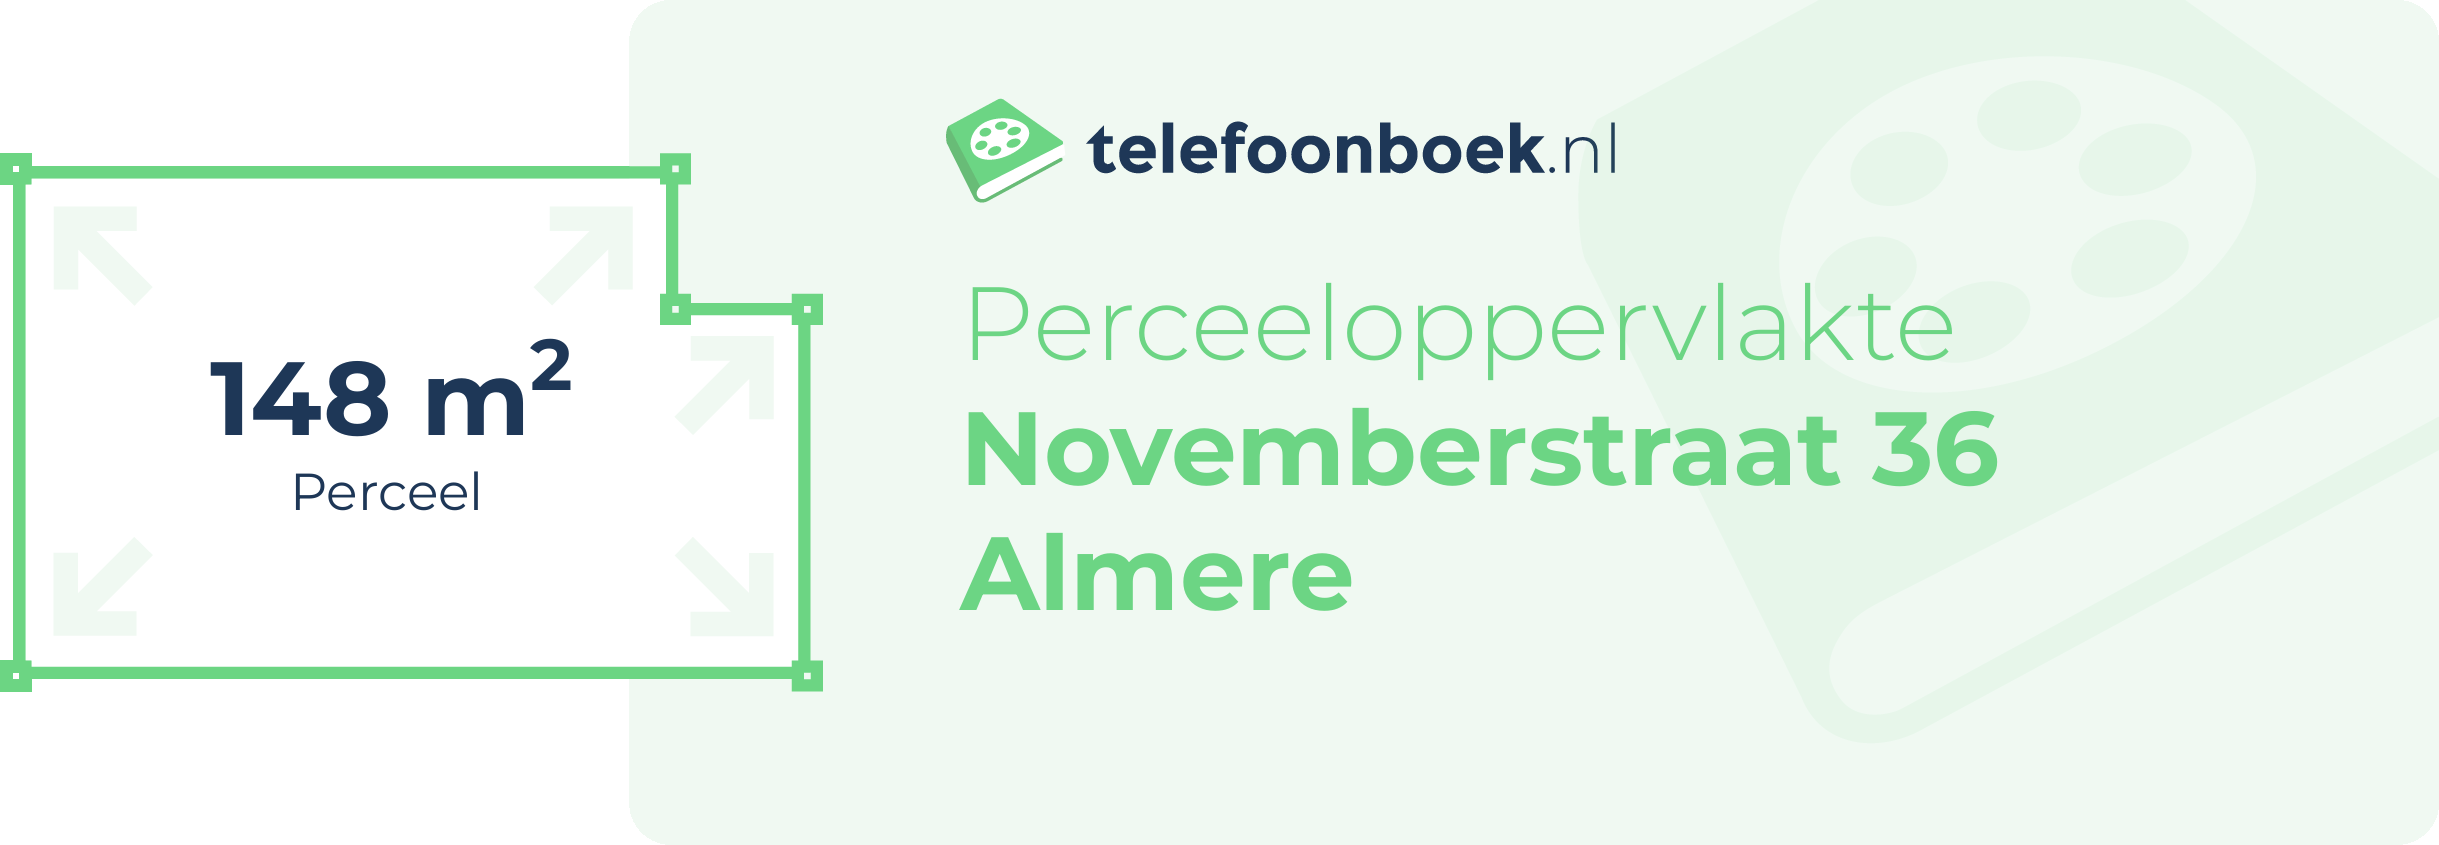 Perceeloppervlakte Novemberstraat 36 Almere